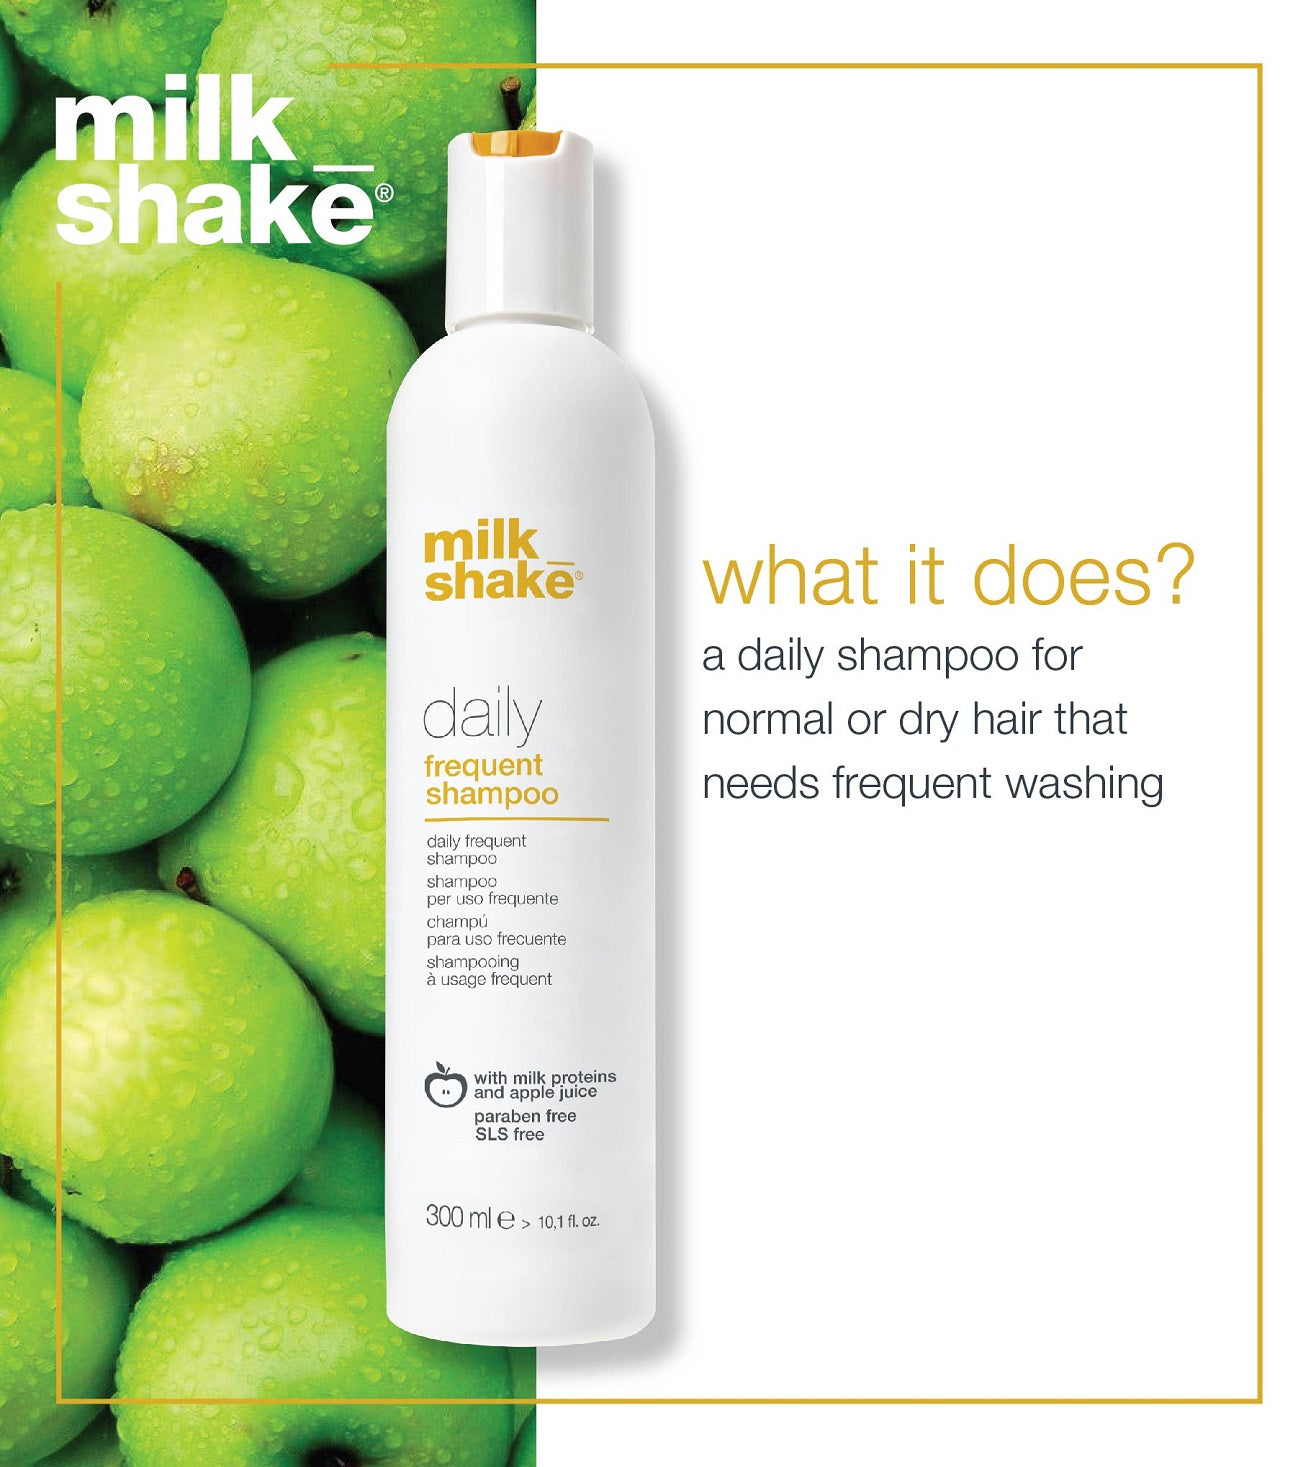 milk_shake daily frequent shampoo –